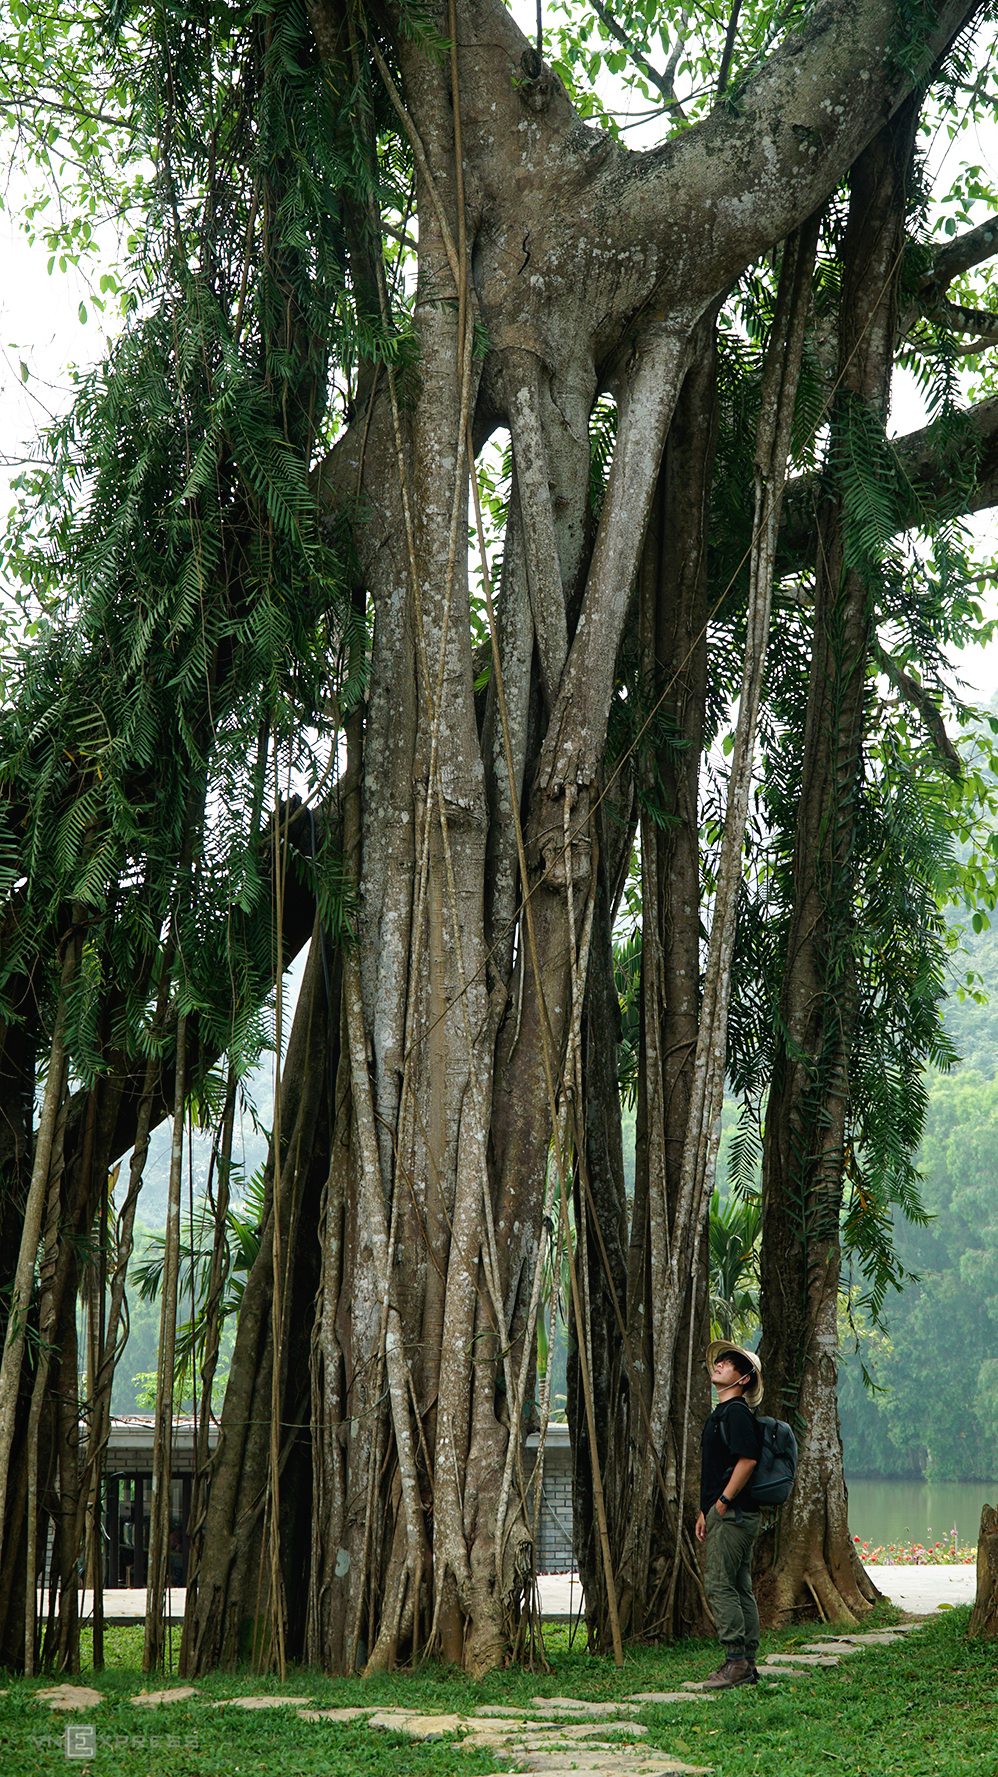 5 giant trees attract tourists across Vietnam